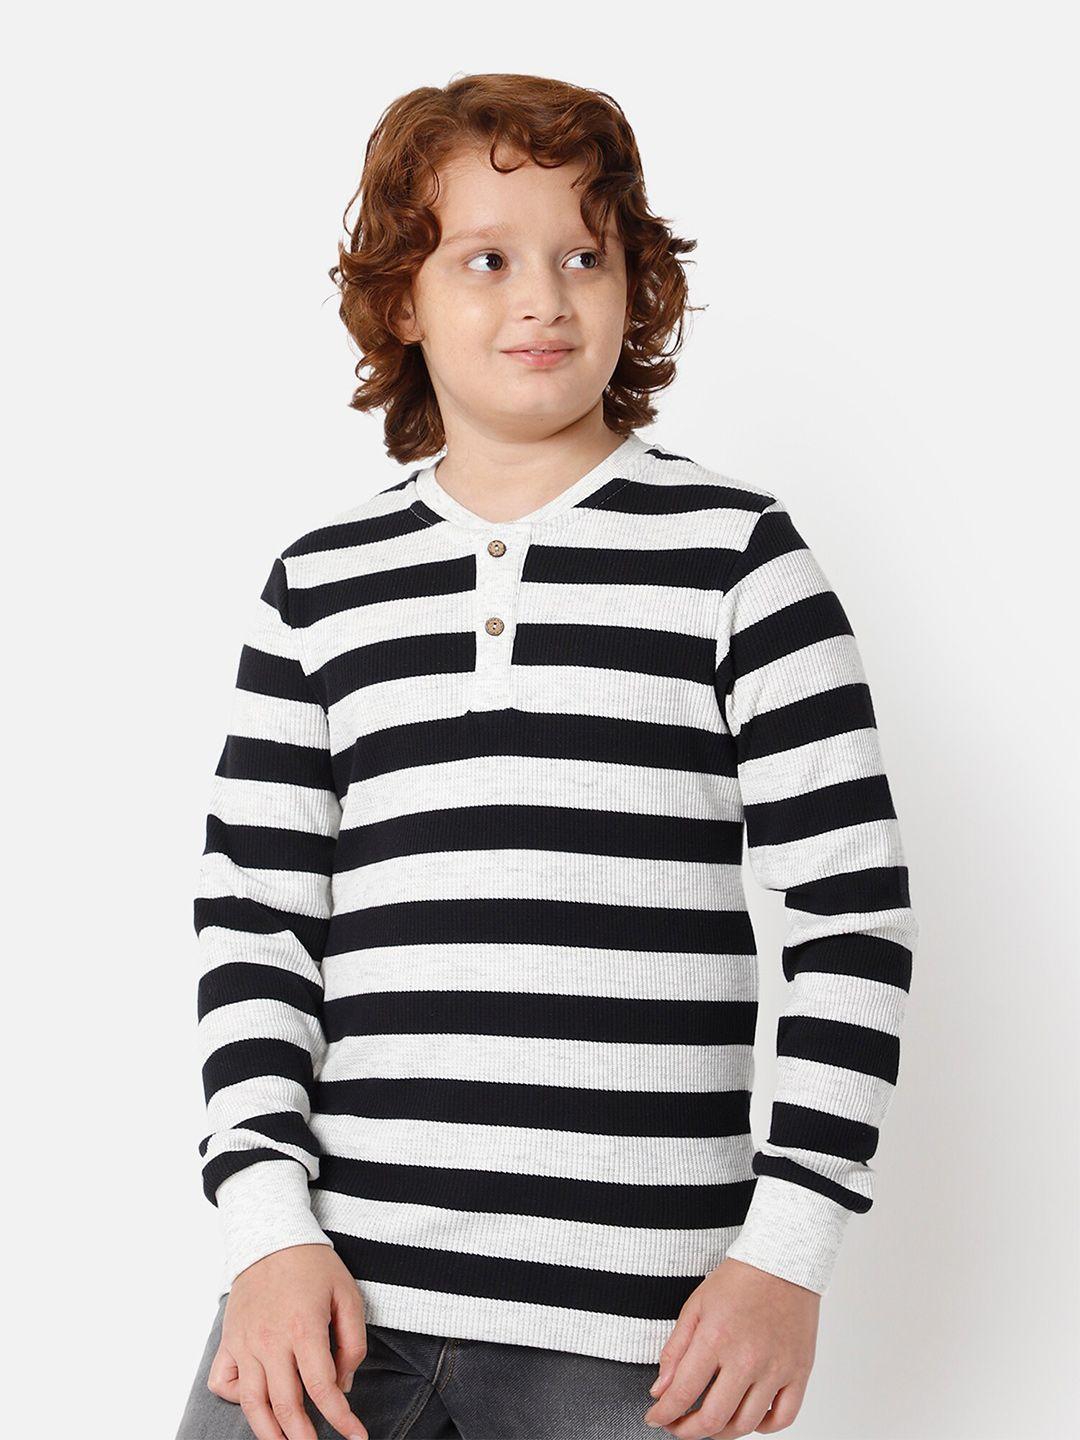 proteens boys white & black striped henley neck t-shirt